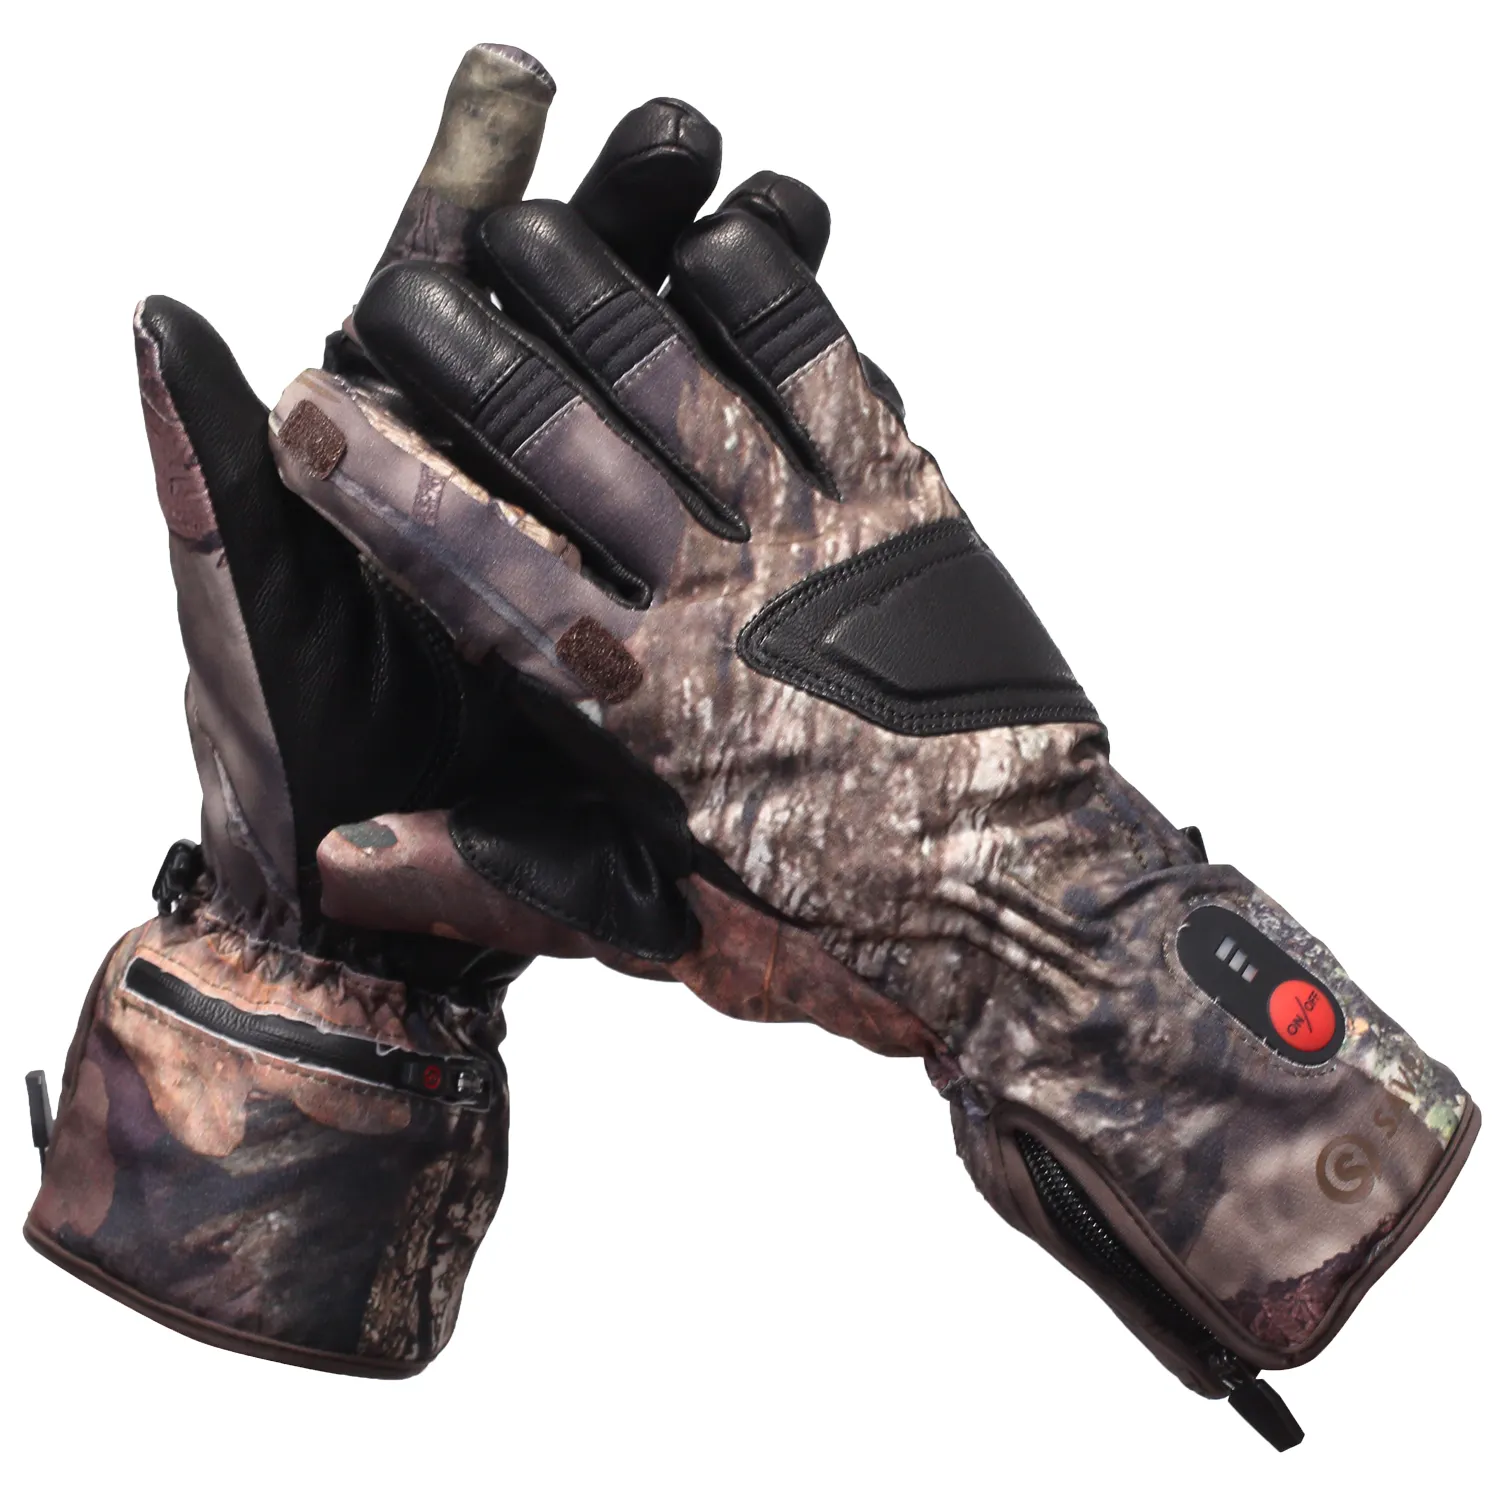 Caliente guantes recargable USB inteligente de pesca de esquí de Invierno Caliente impermeable guantes